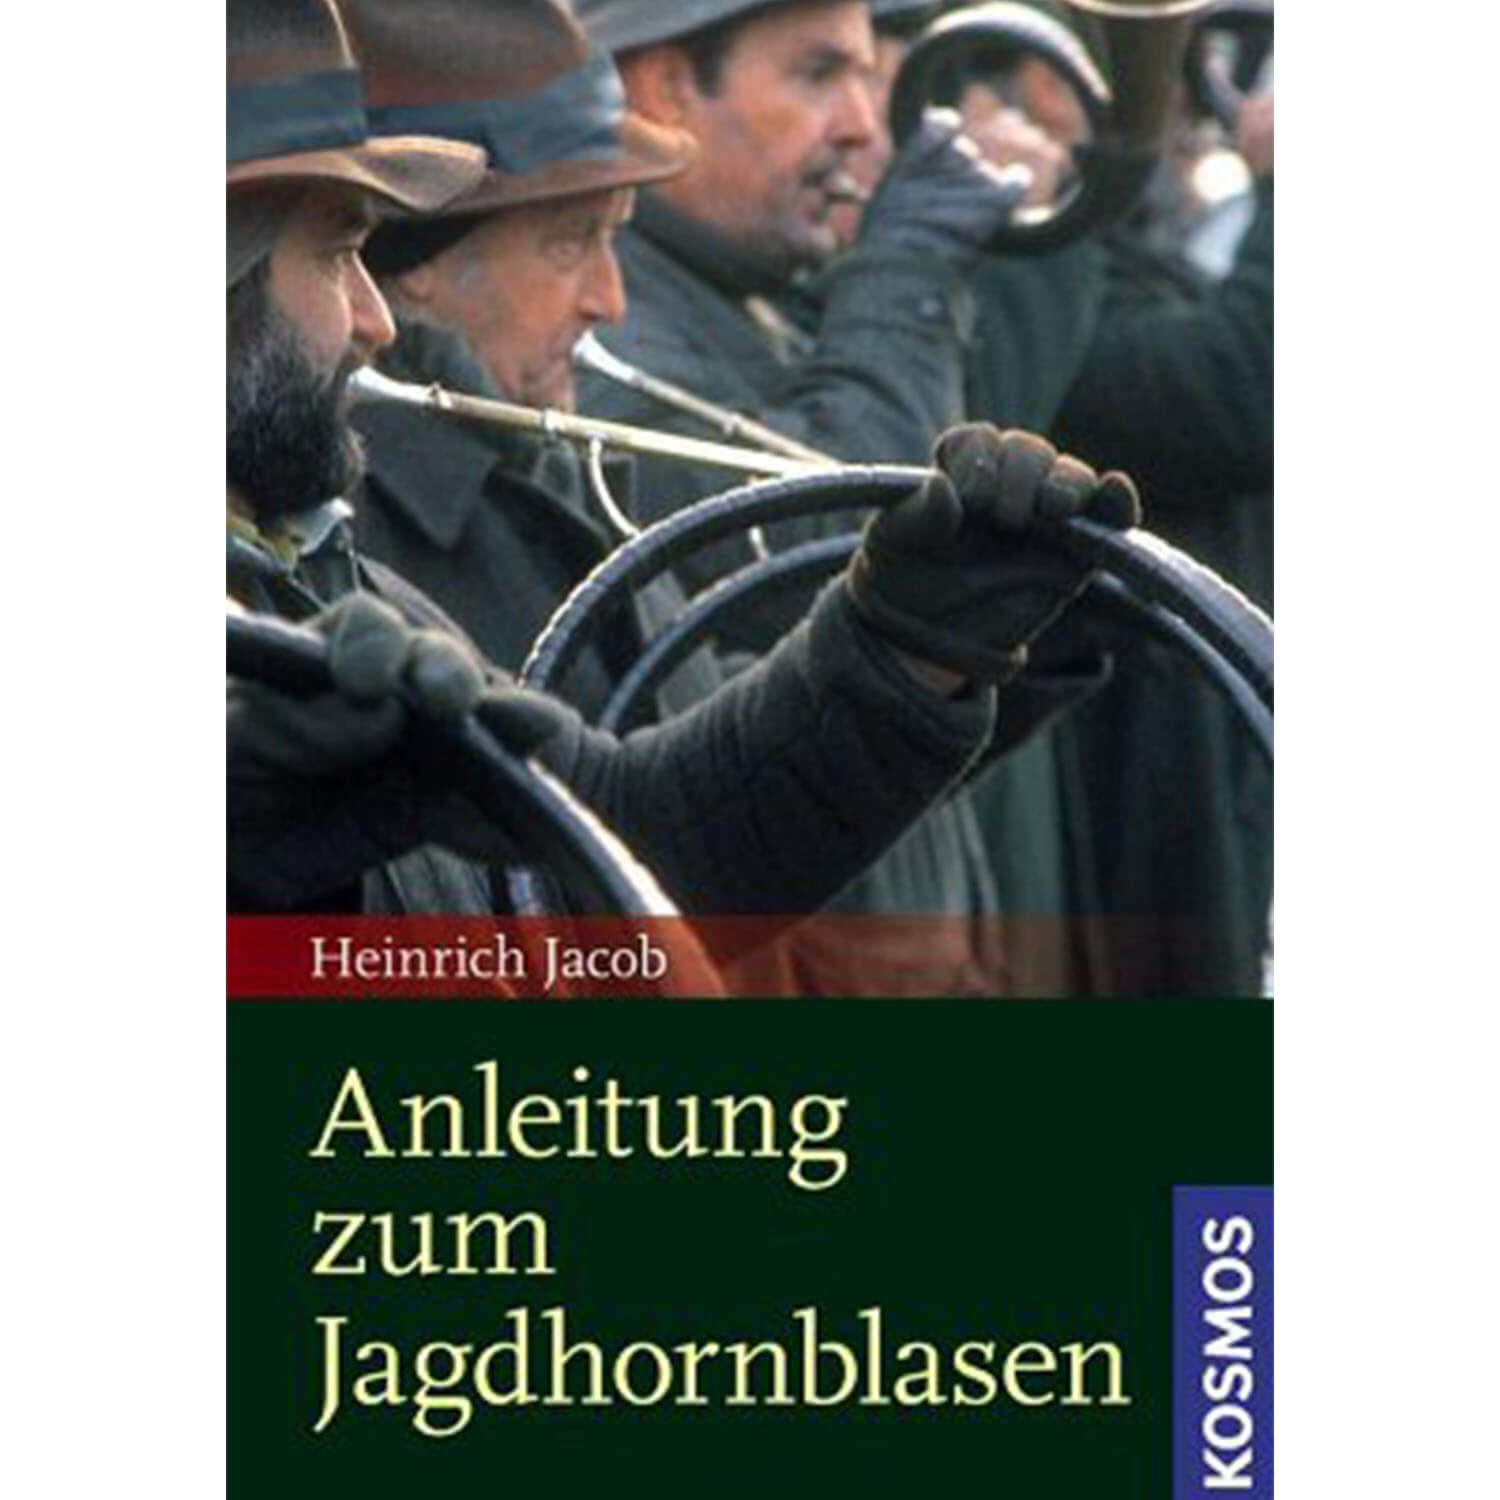 Anleitung zum Jagdhornblasen - Buch - Heinrich Jacob